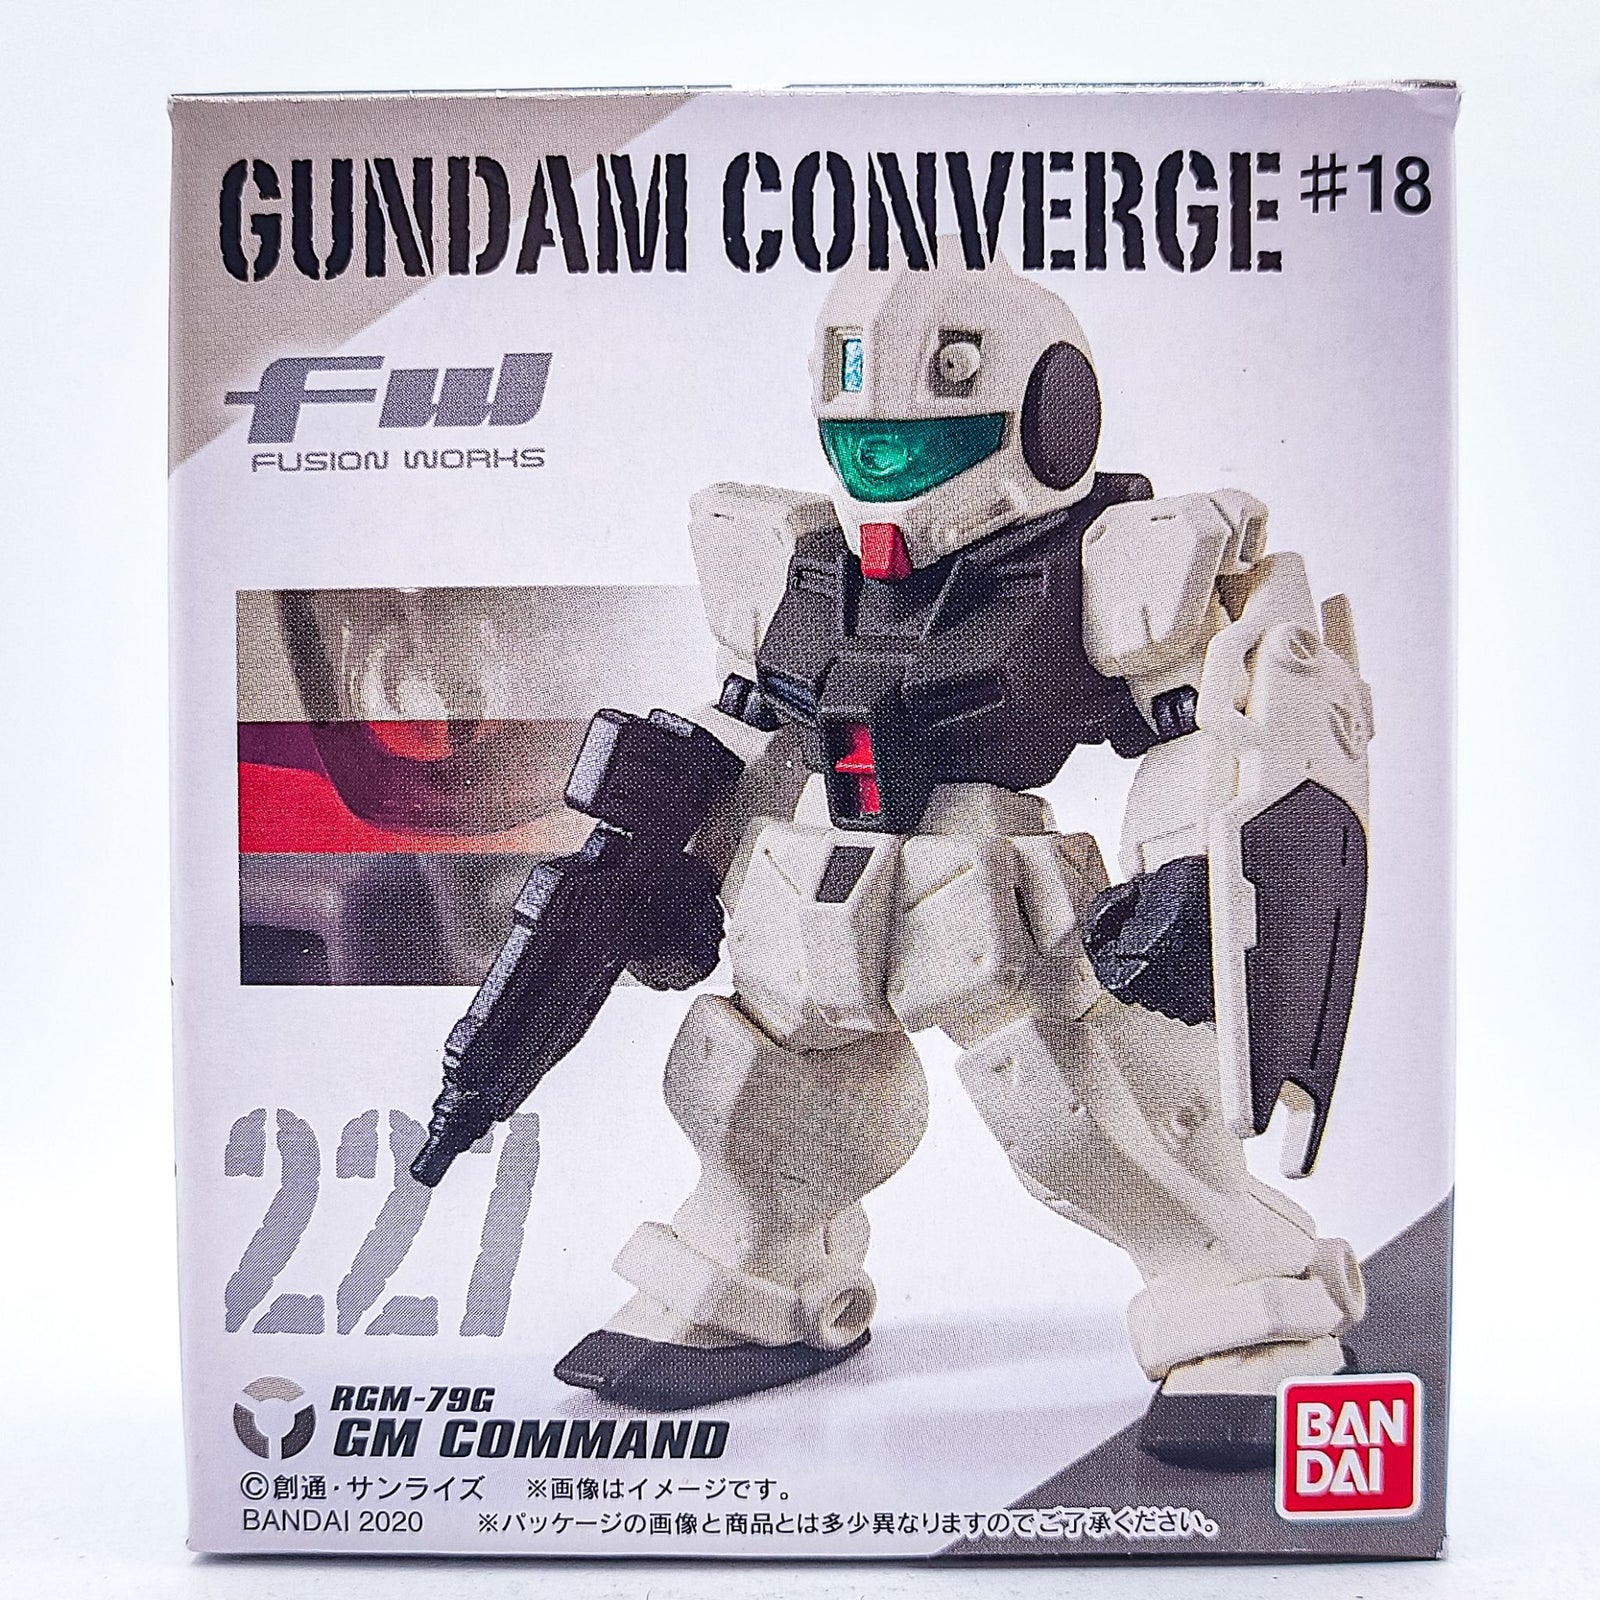 Gundam Converge #227 GM Command by Bandai - 1